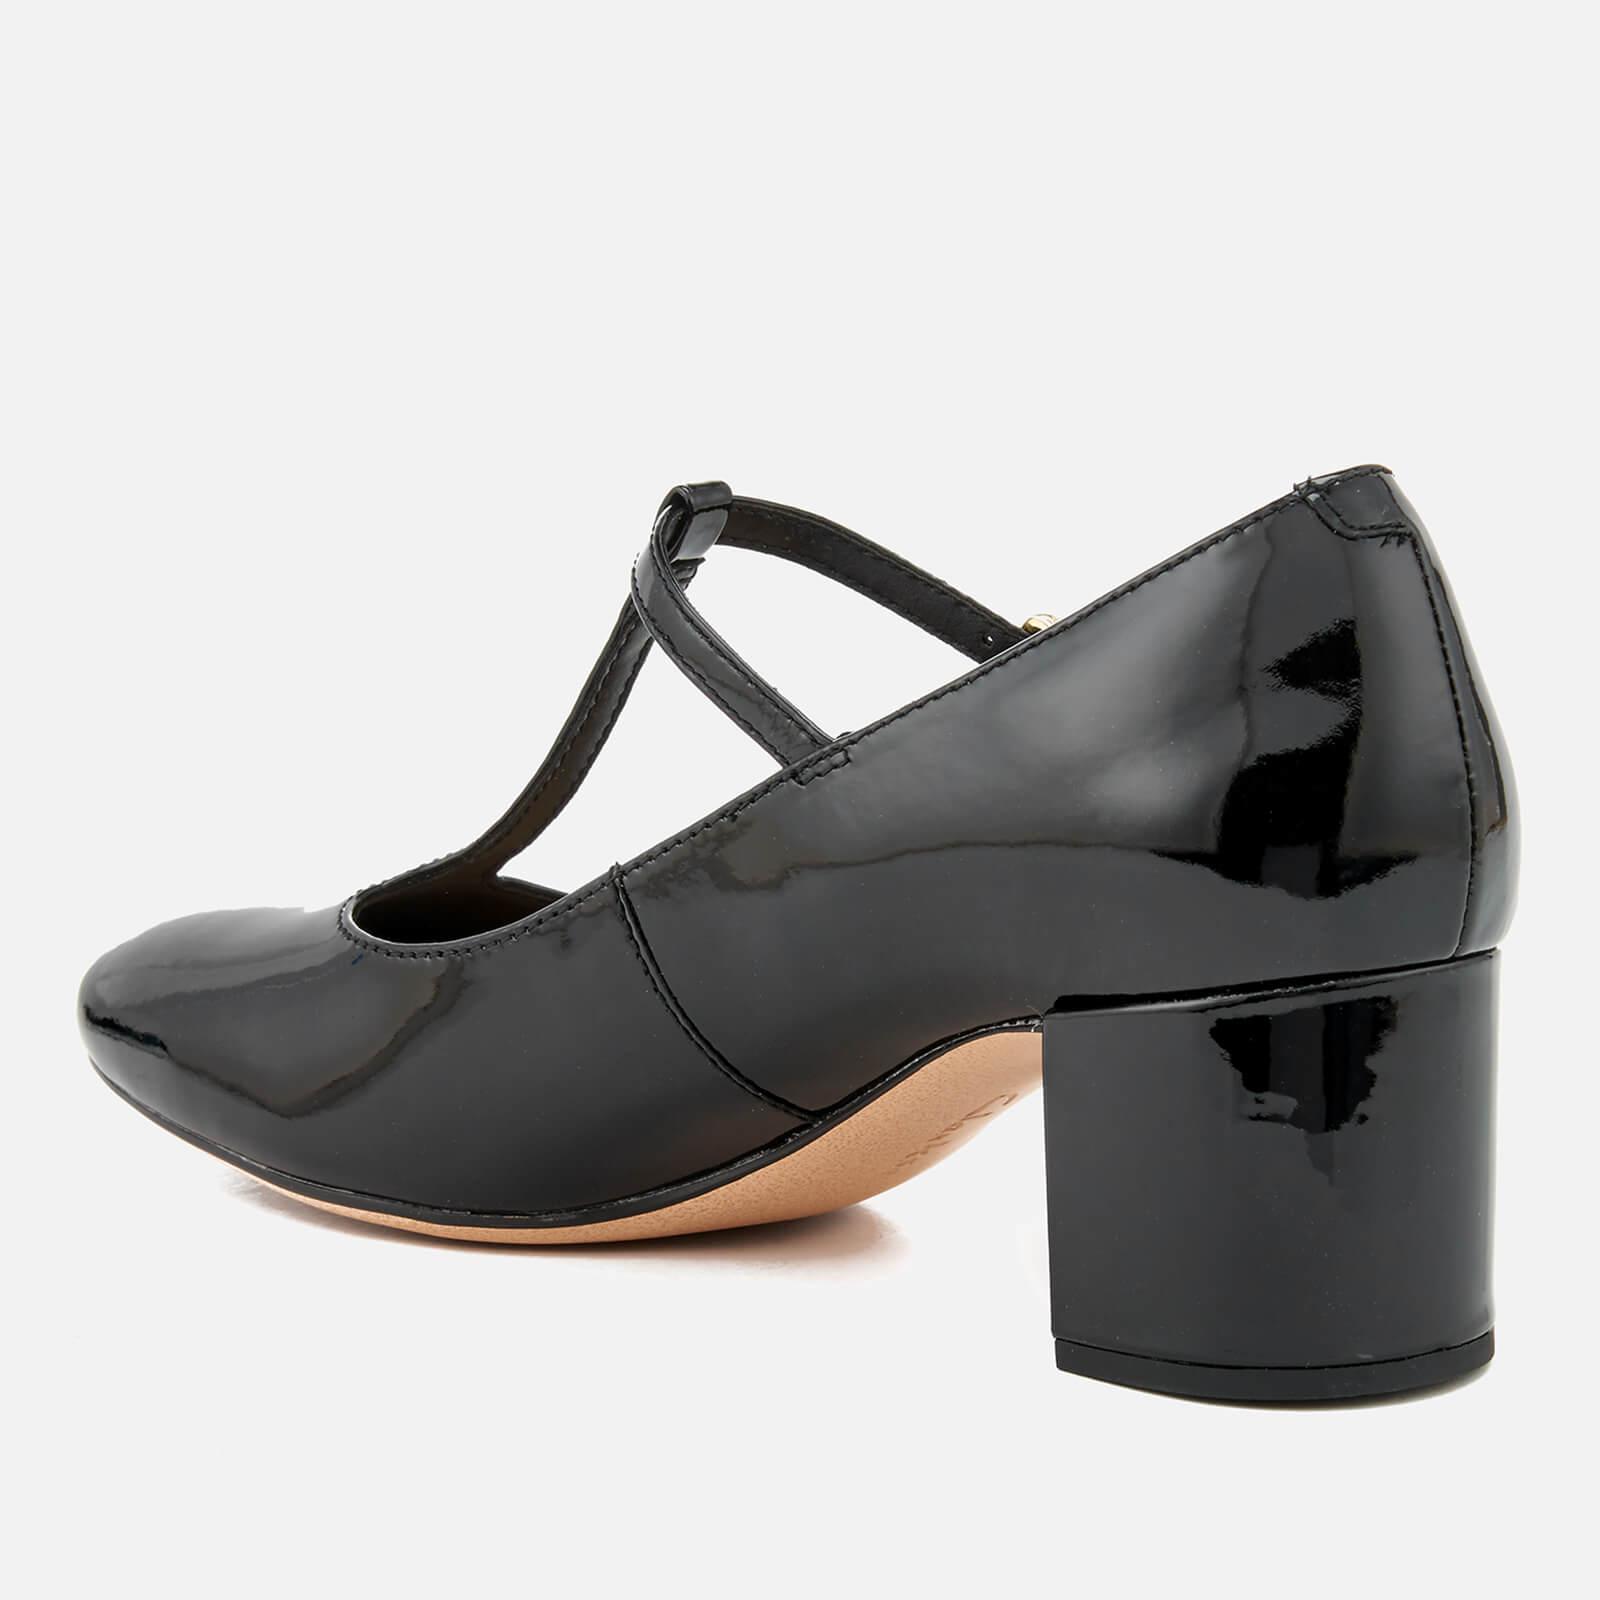 Clarks Leather Orabella Fern Patent T-bar Block Heels in Black | Lyst